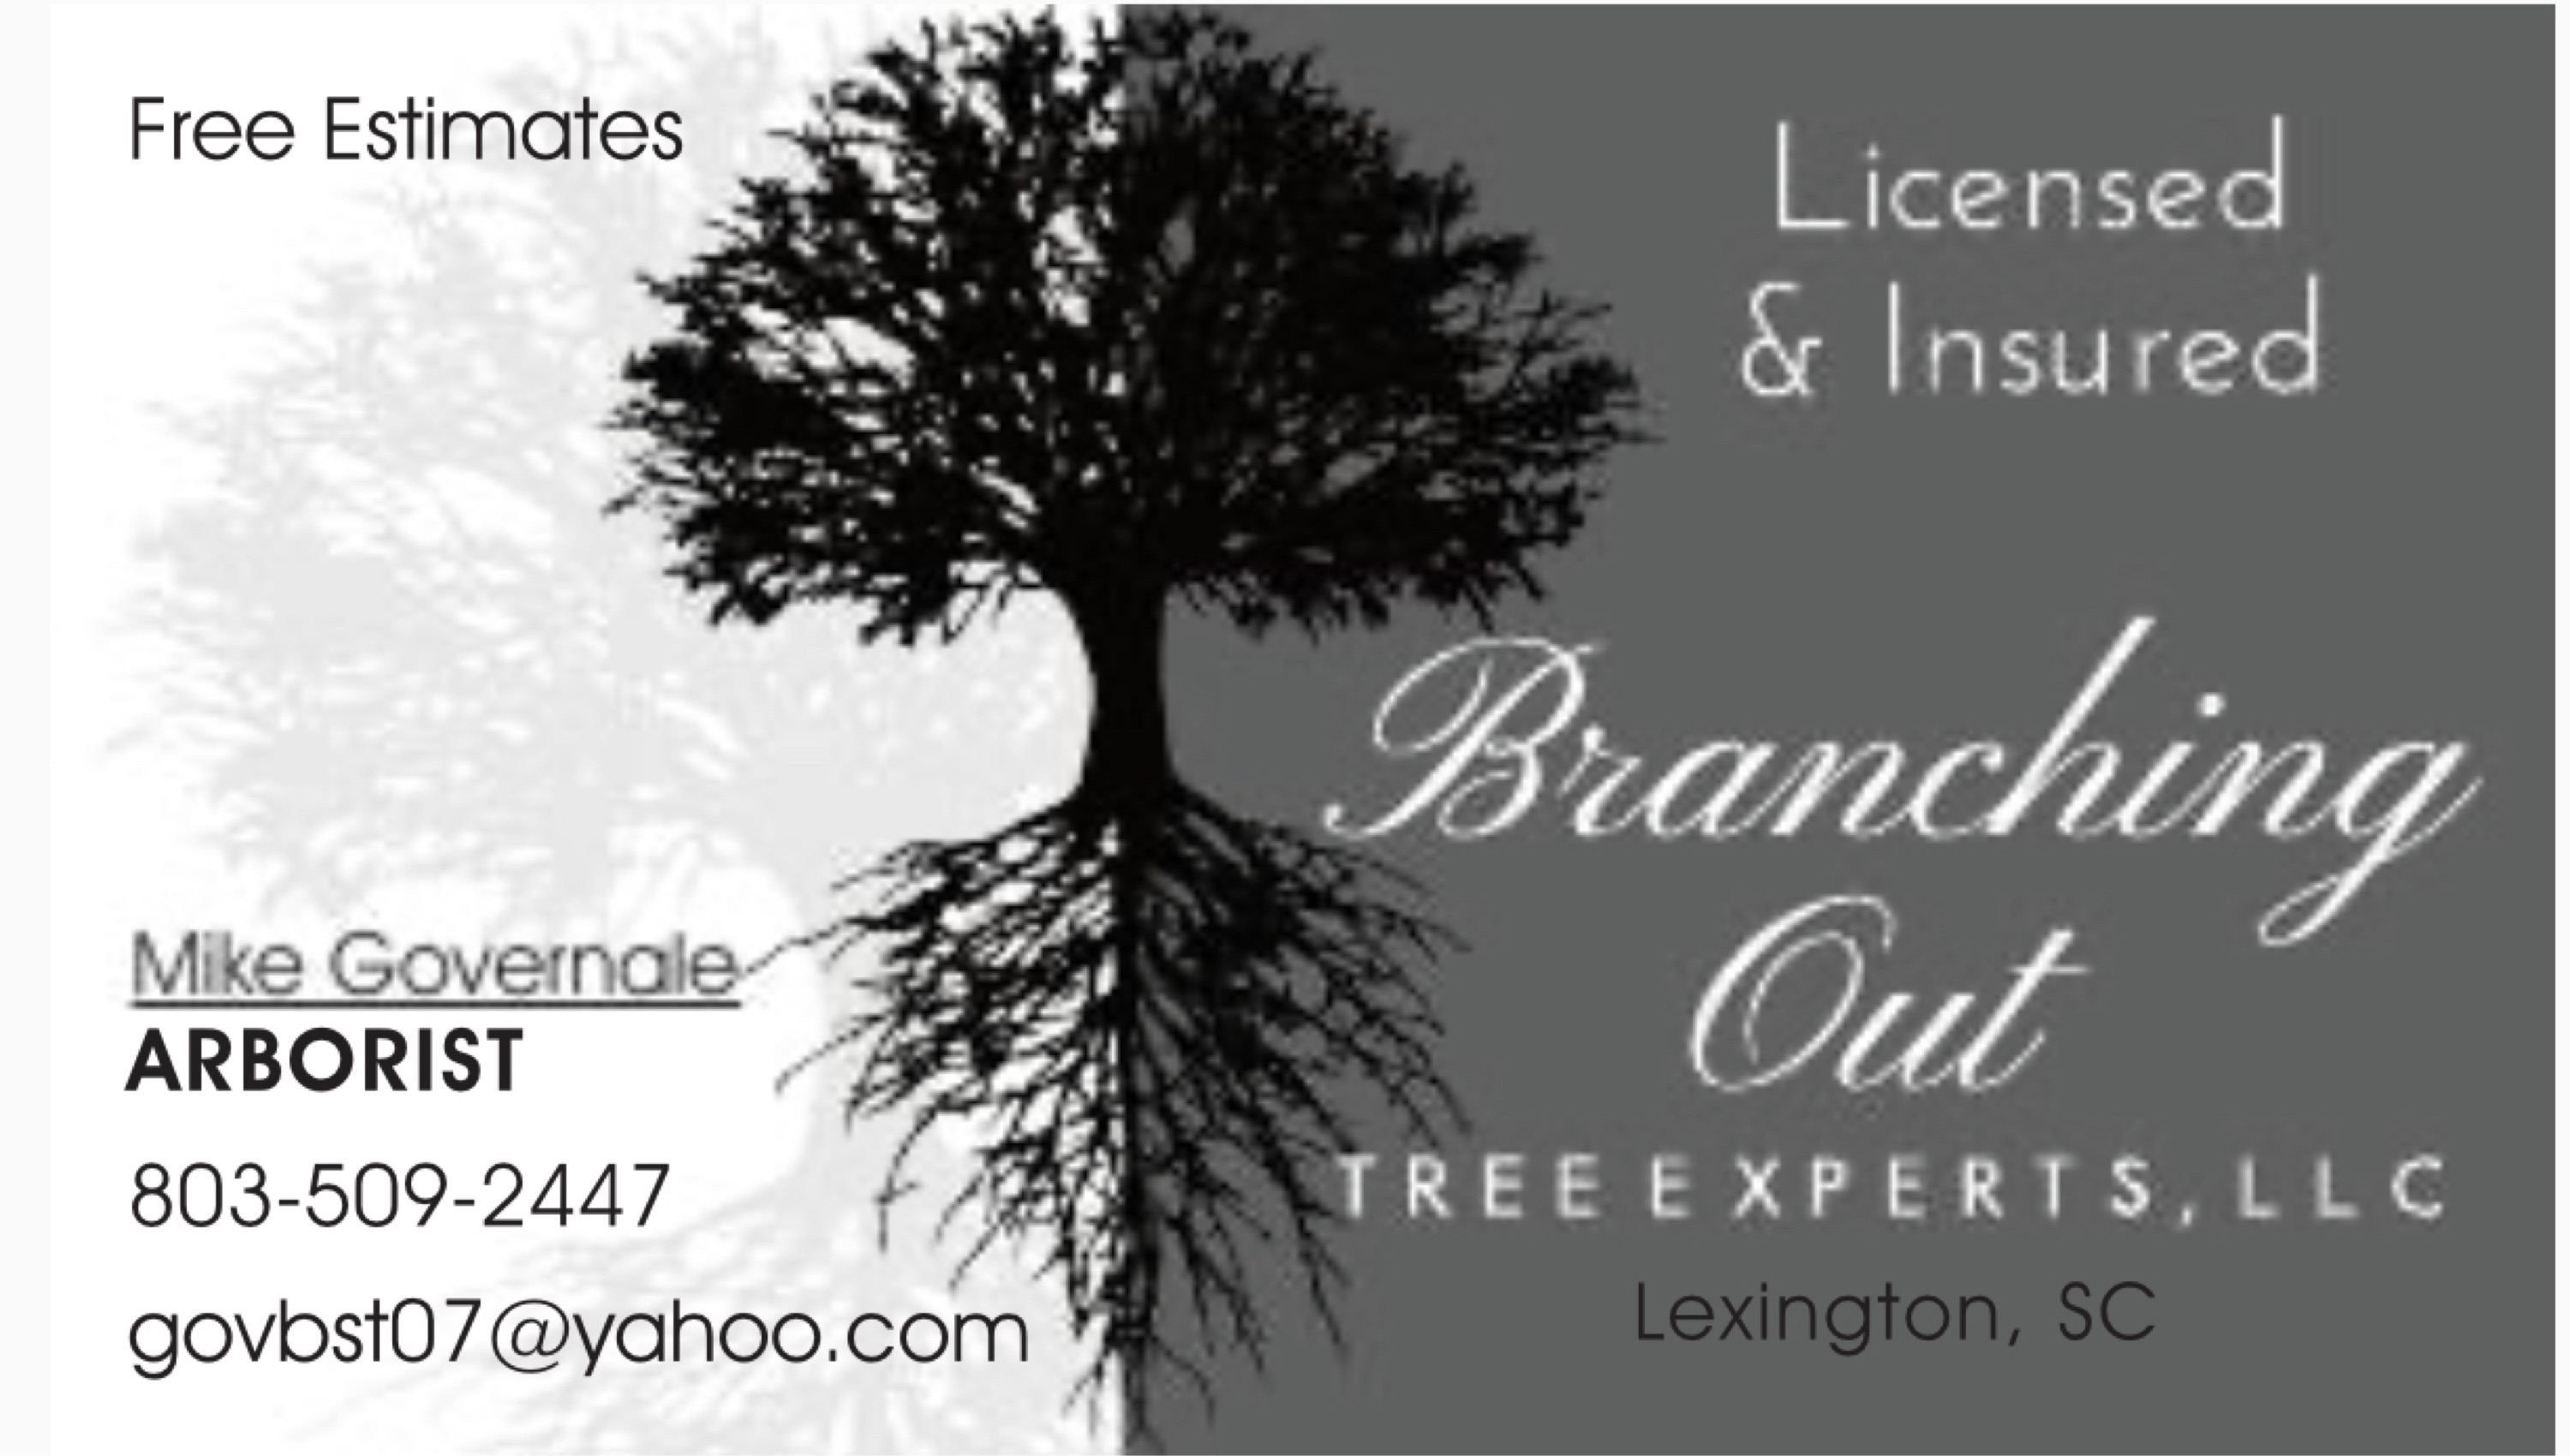 Branching Out Tree Experts, LLC Logo